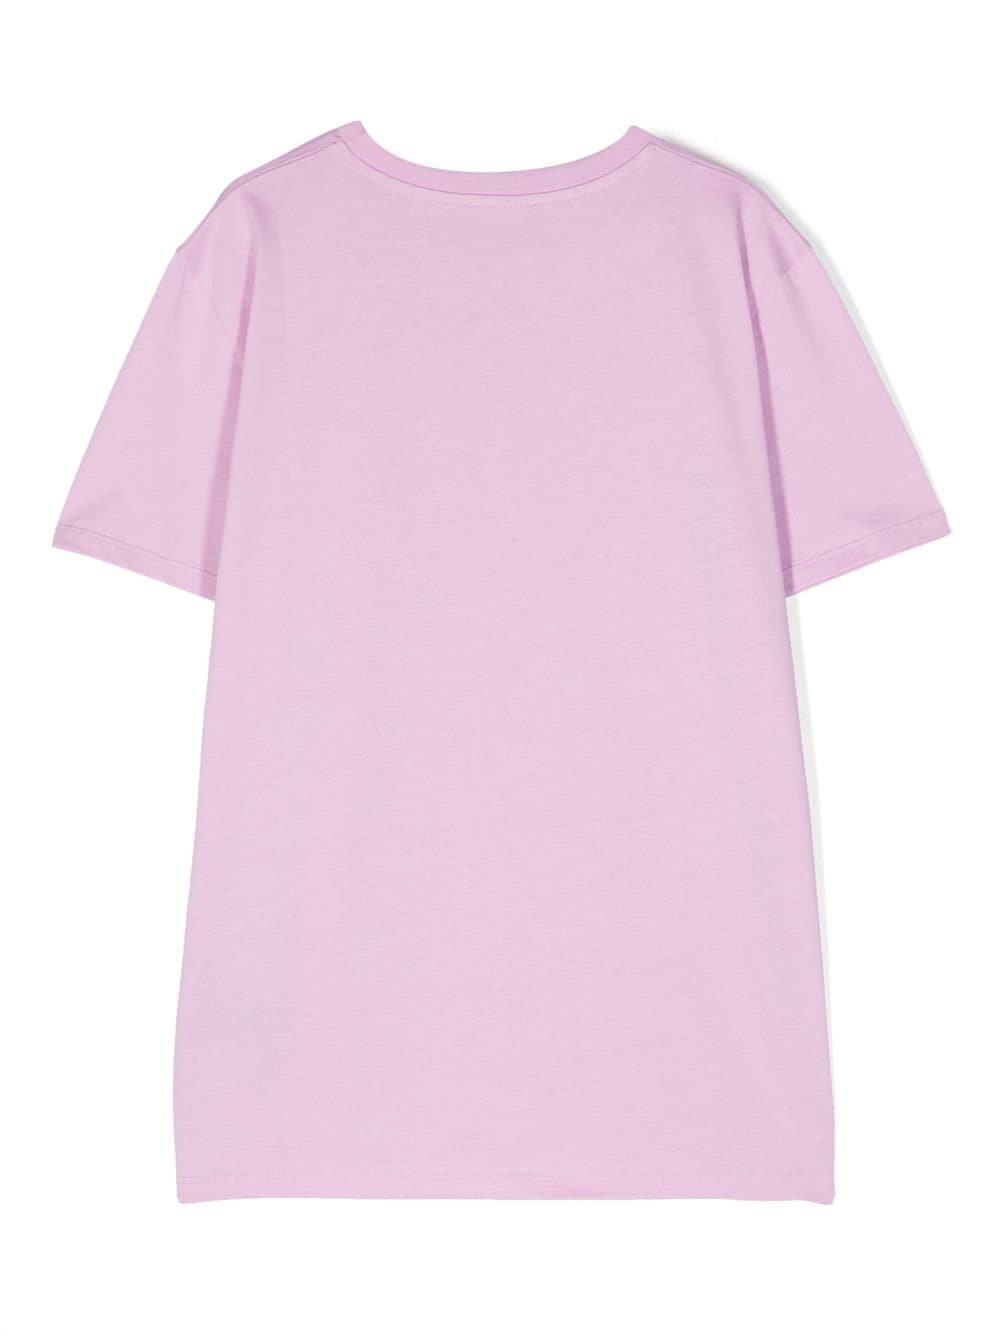 Lilac cotton jersey girl BALMAIN t-shirt | Carofiglio Junior